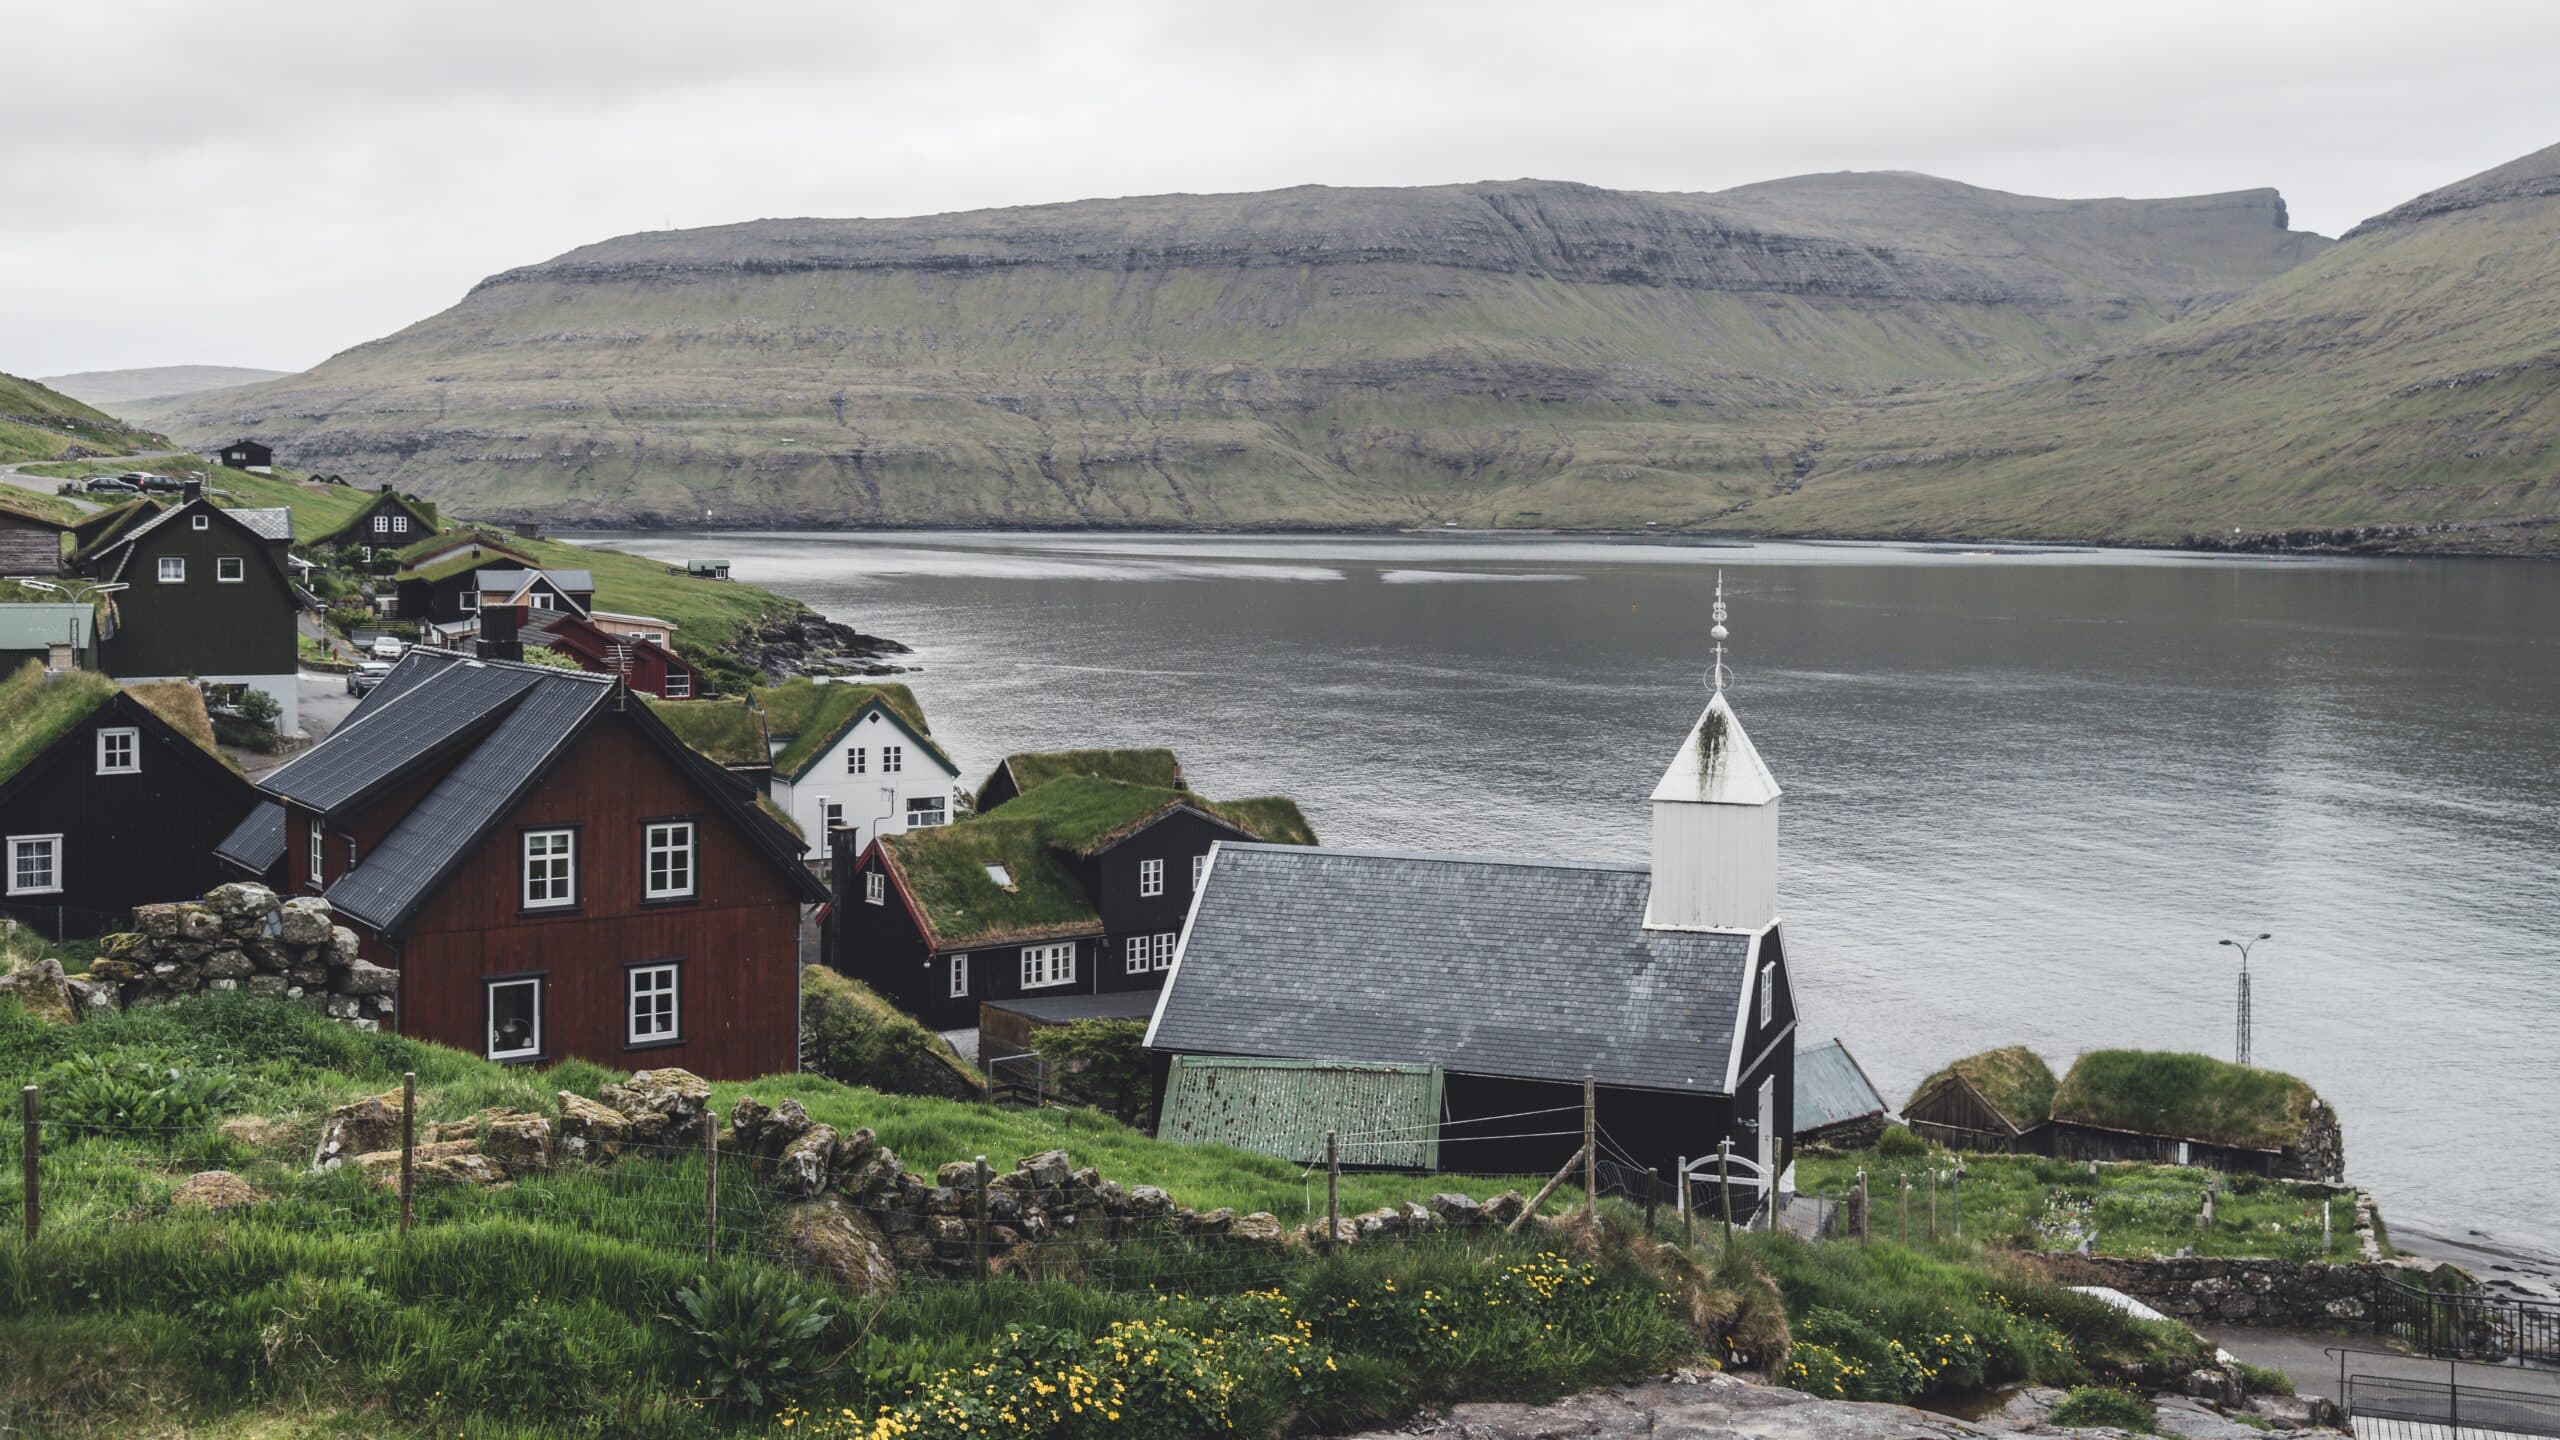 The village of Bour in the Faroe Islands